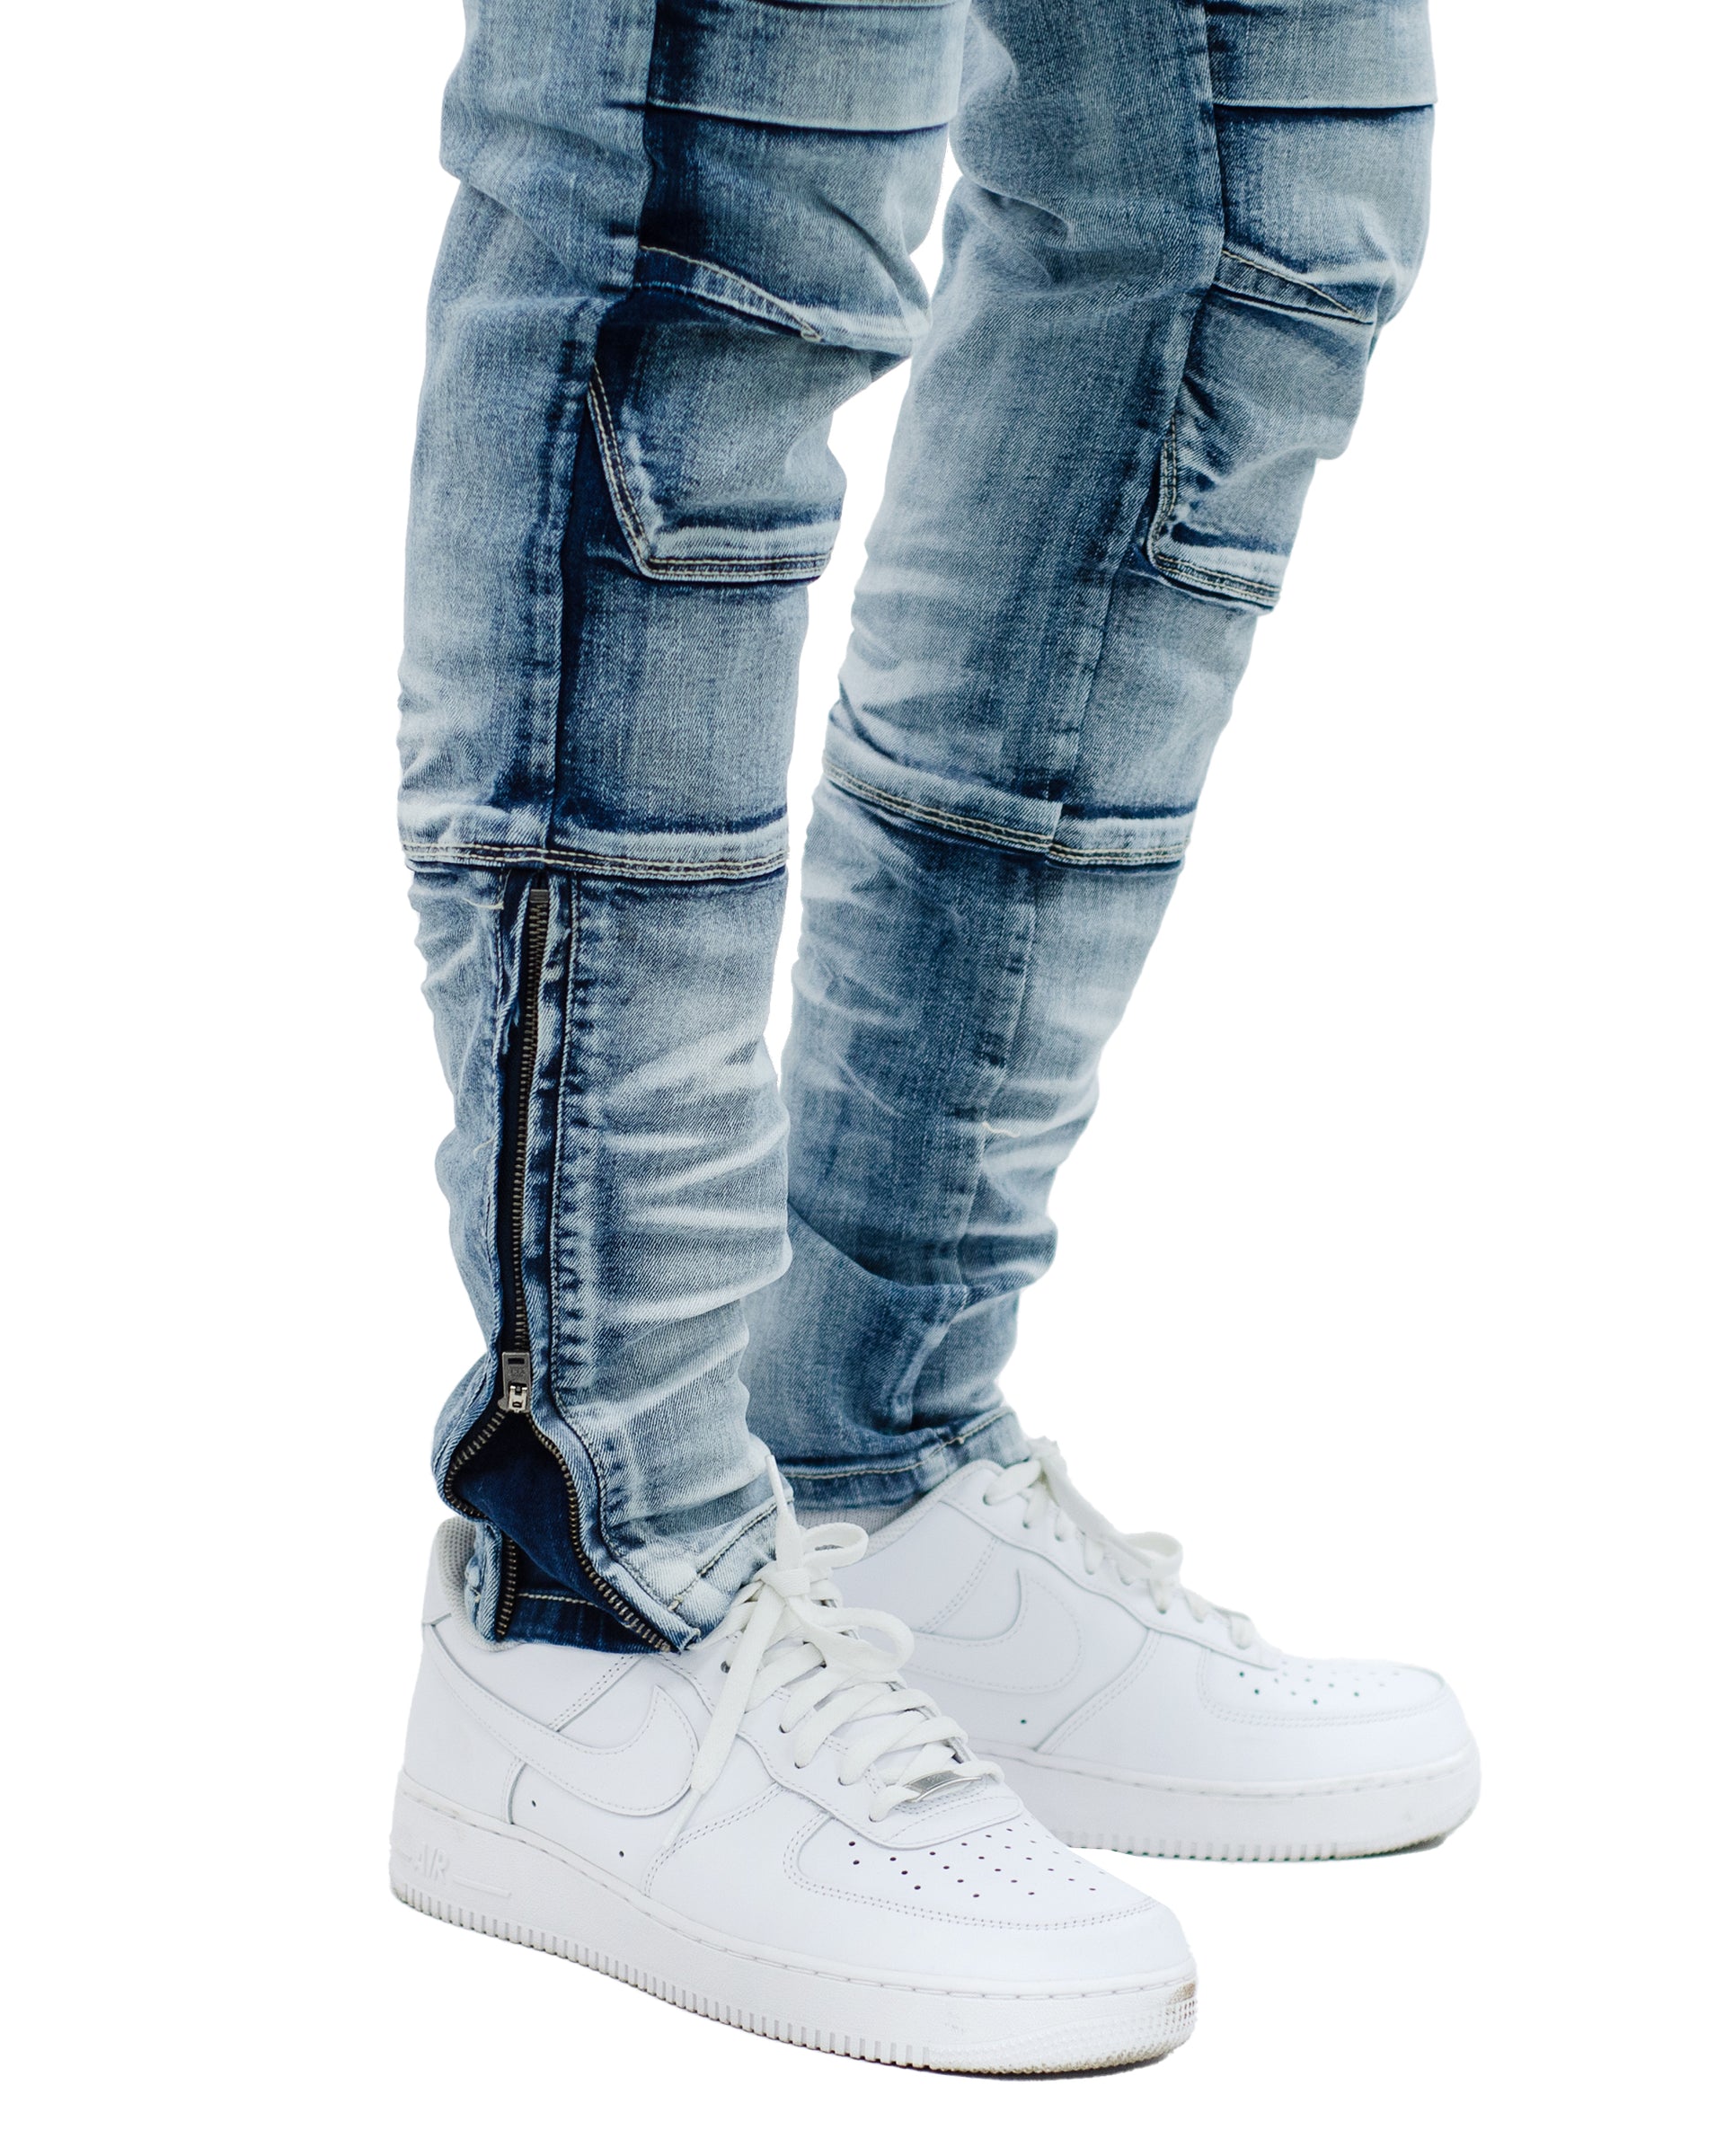 RAVENSWOOD | Ankle Zipper Multi Seam Skinny Moto Denim Jeans in Acid Wash